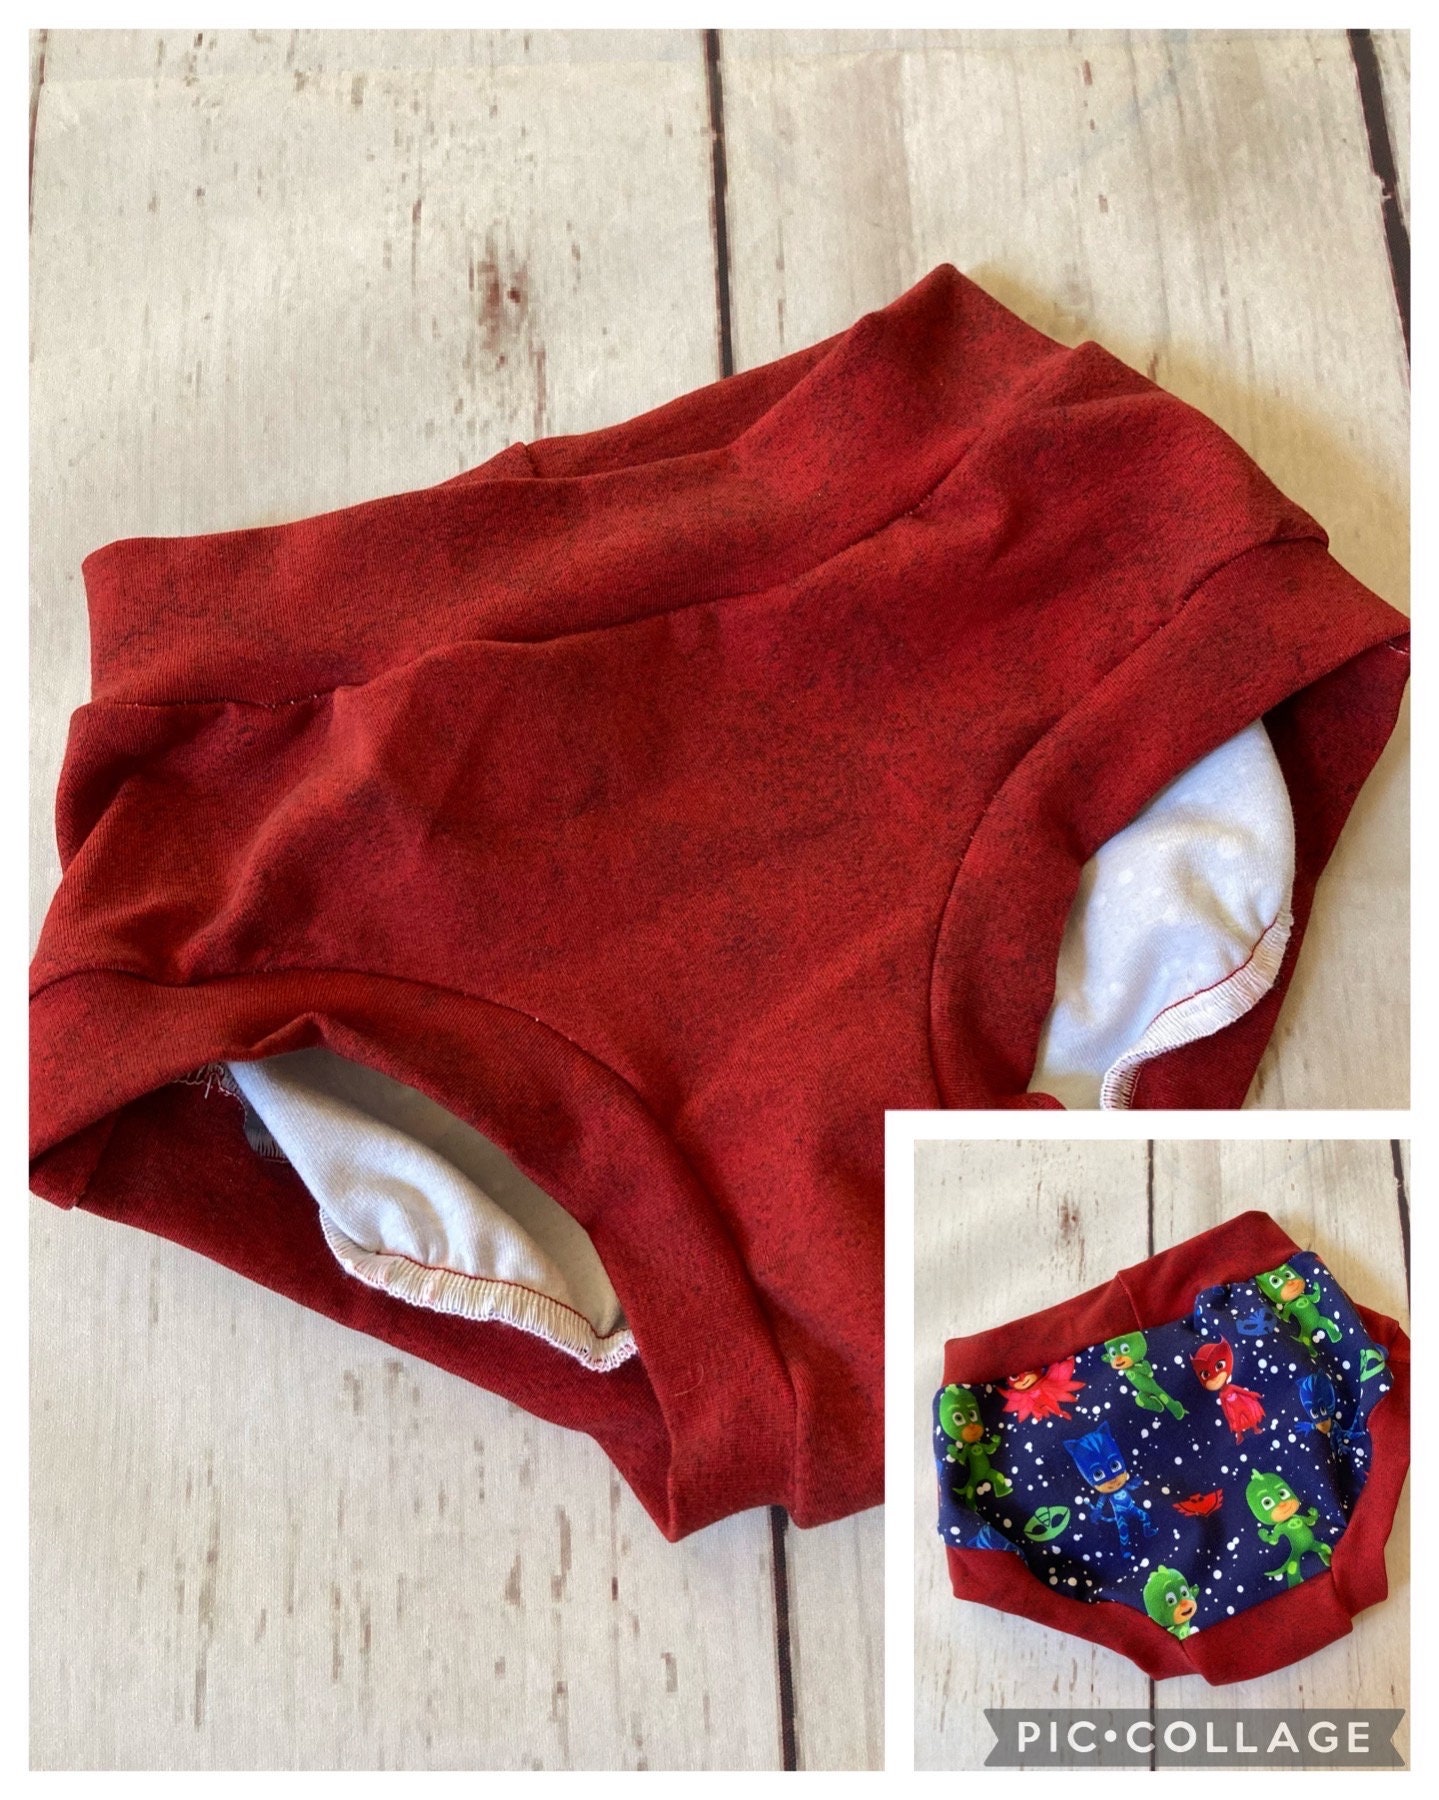 Girls Vintage Underwear Unused Vintage Red Underwear Underpants